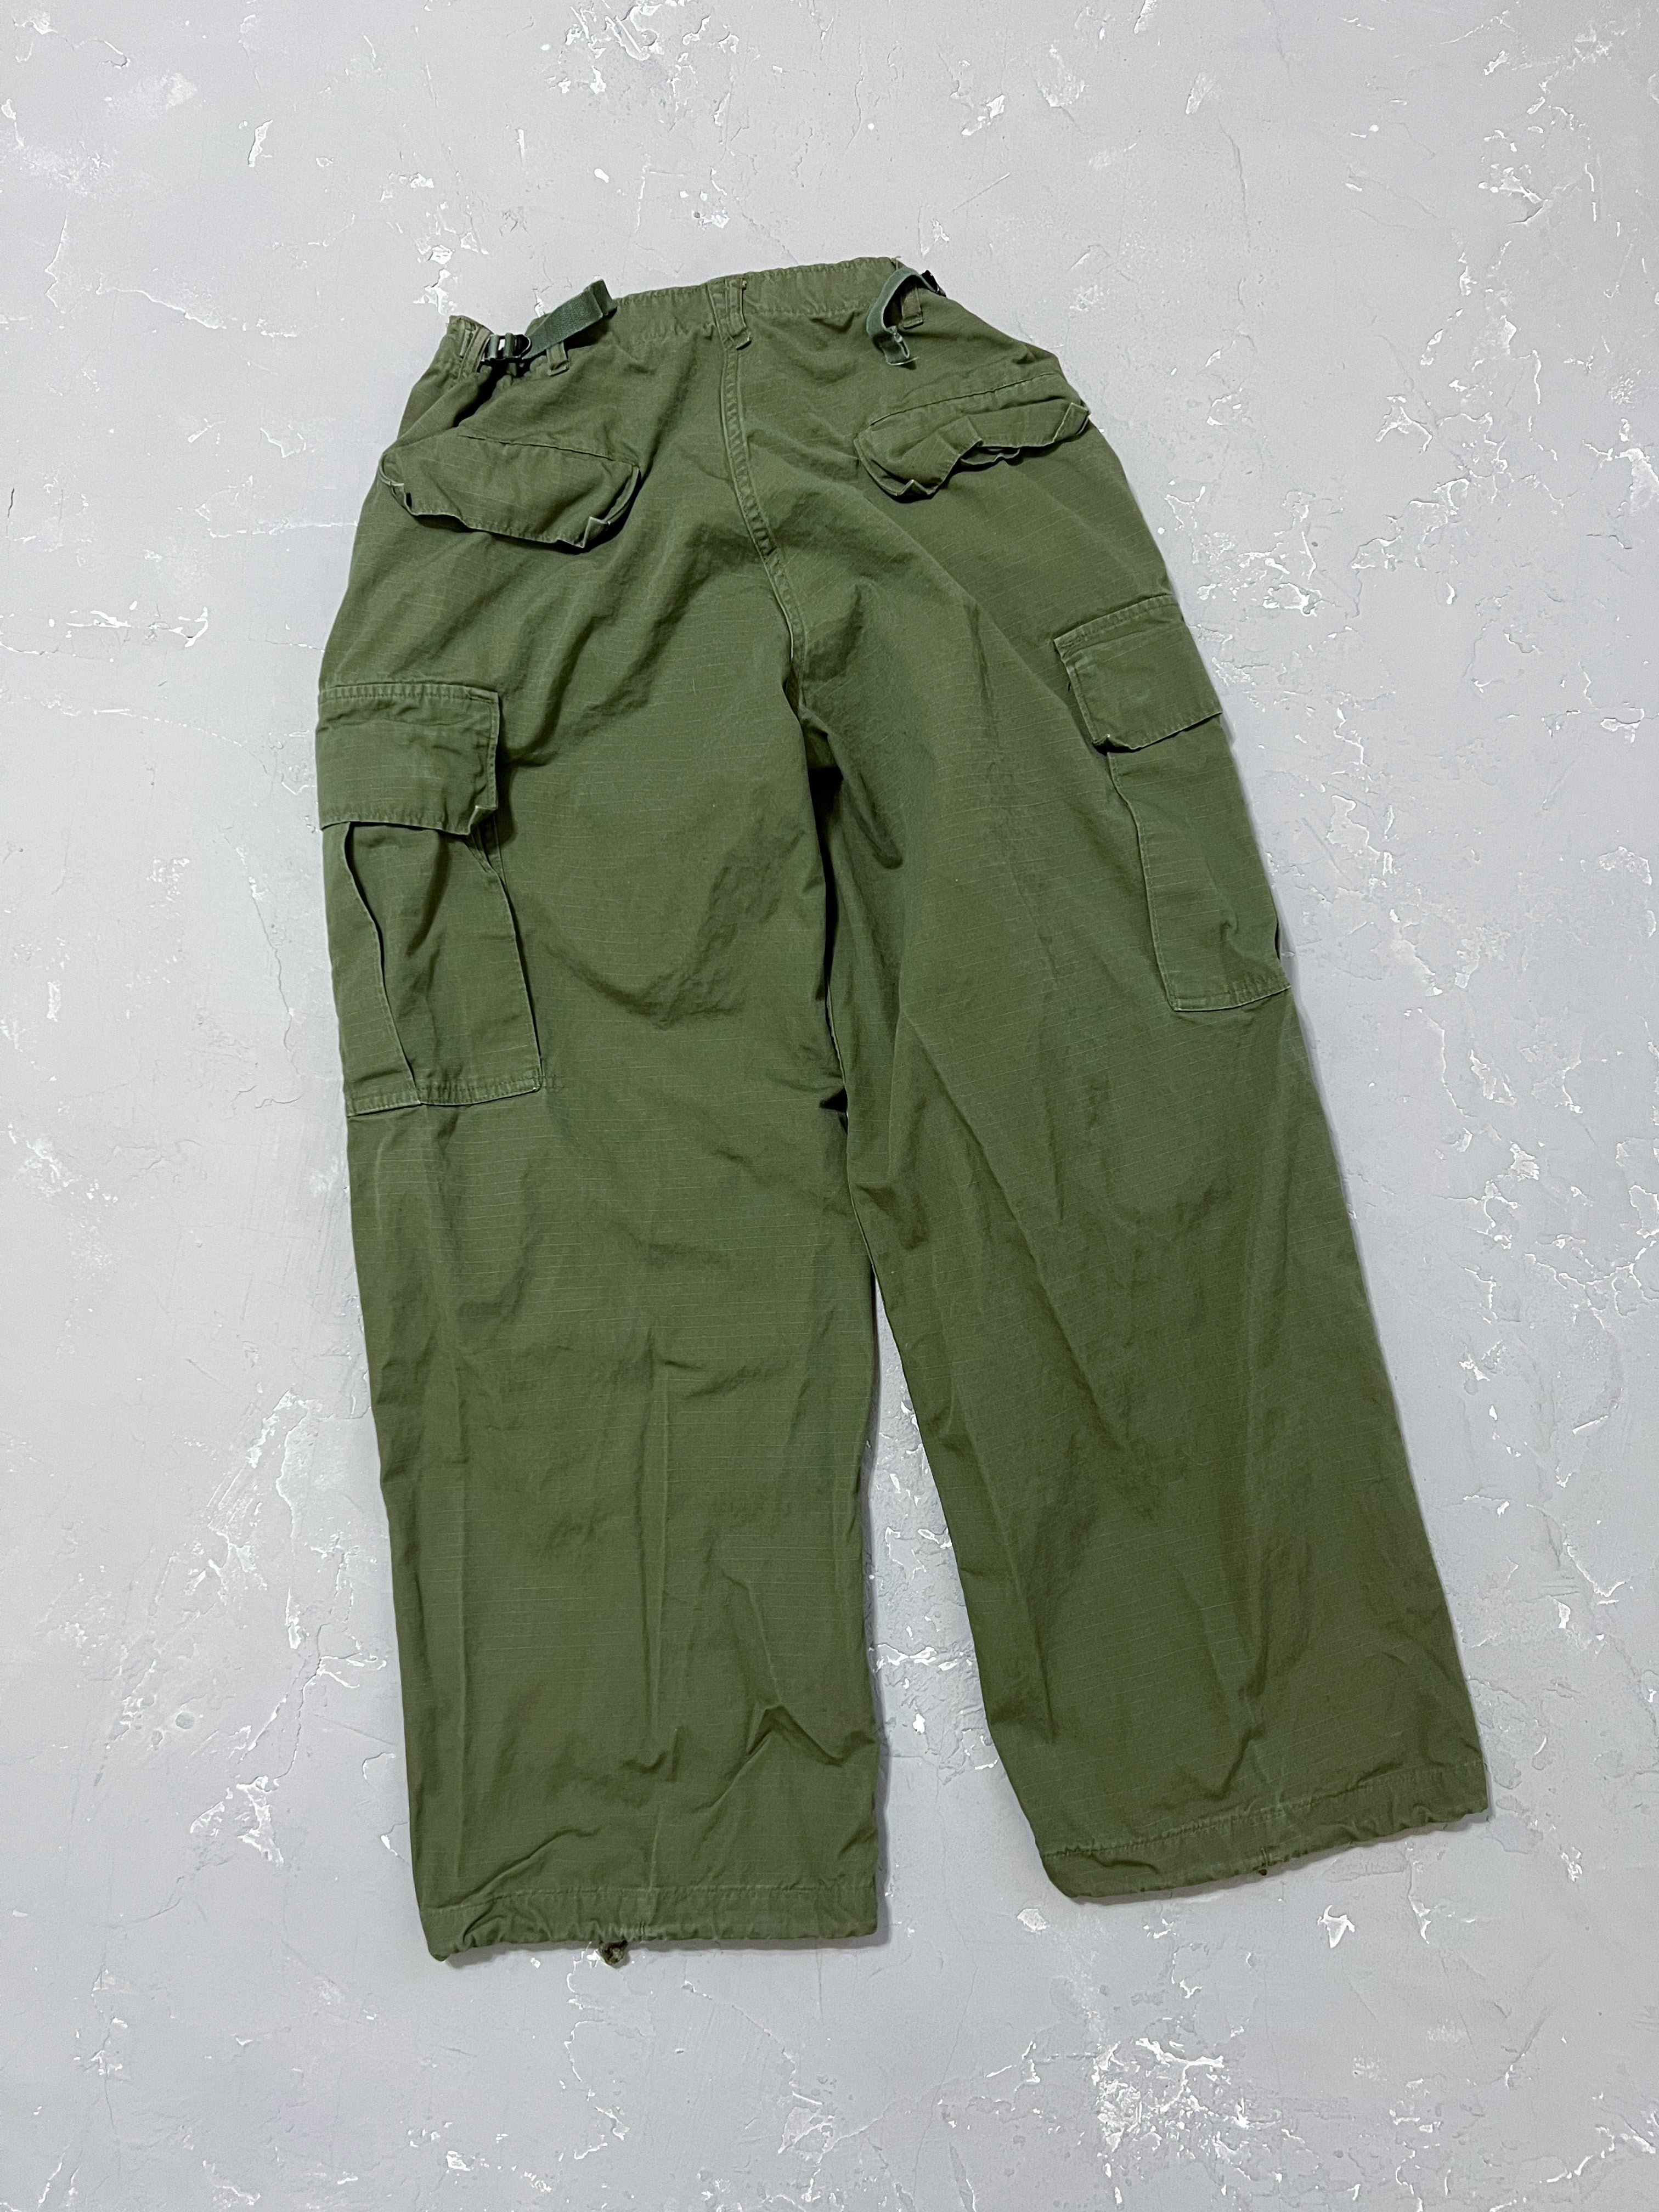 1969 Vietnam War OG-107 Tropical Combat Pants [26-32 x 30]